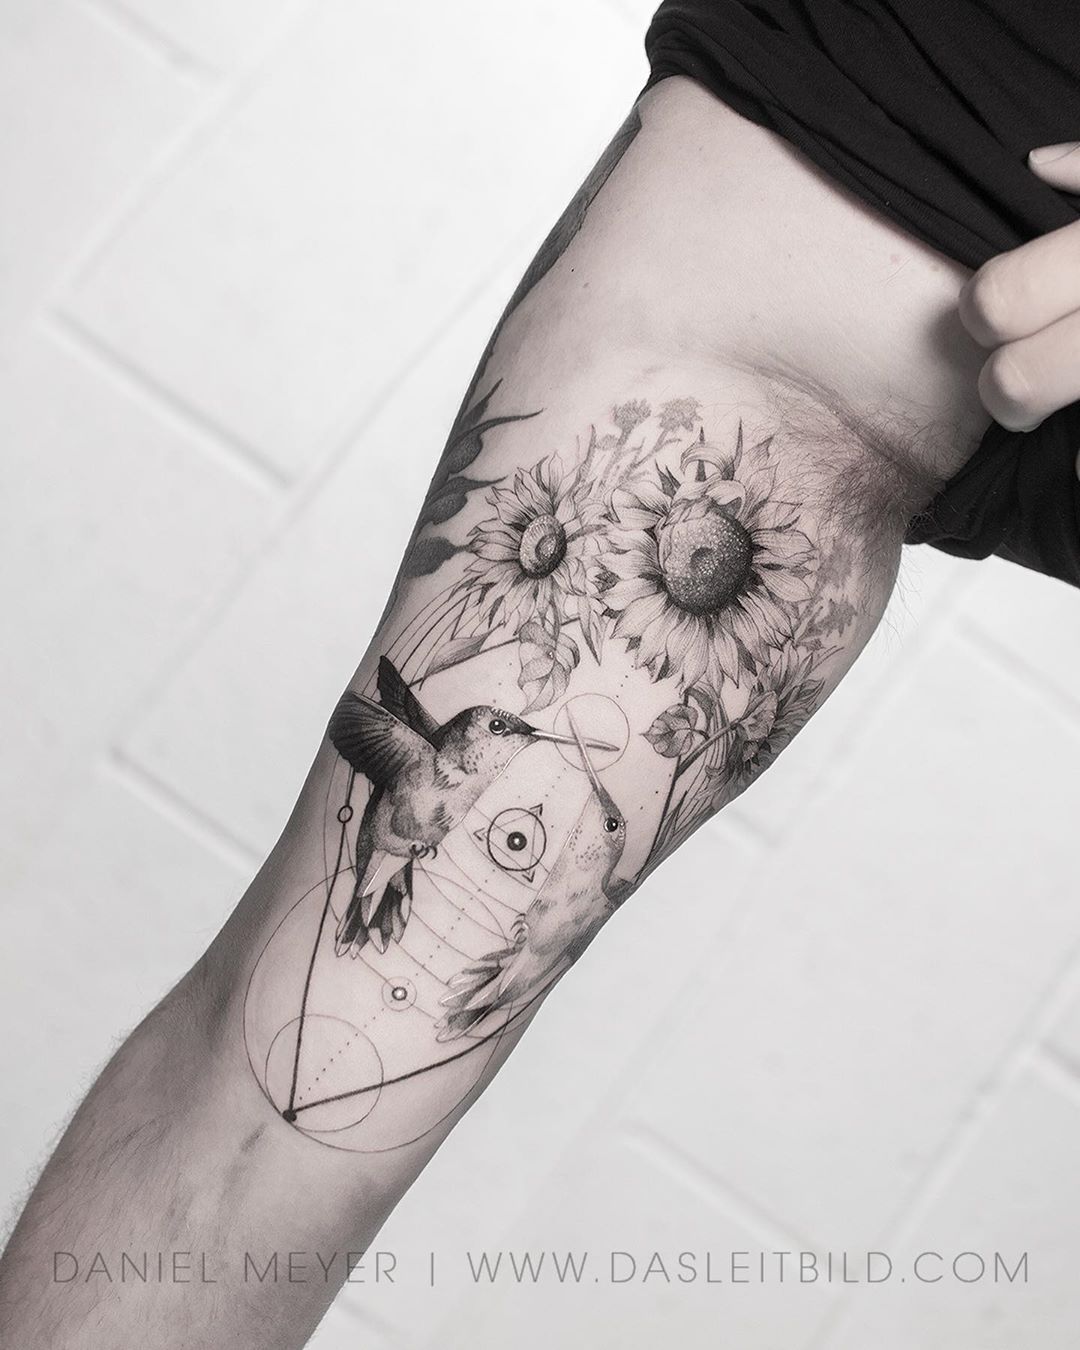 Mark Kannenberg on Twitter workinprogress sunflower hummingbird tattoo  tattoos tattooist tattooartist twitter tattoooftheday tattoodo inked  tatuaje tattoosbymkannenberg frictiontattoo painfulpleasures  httpstcoJlXBAMYdfF https 